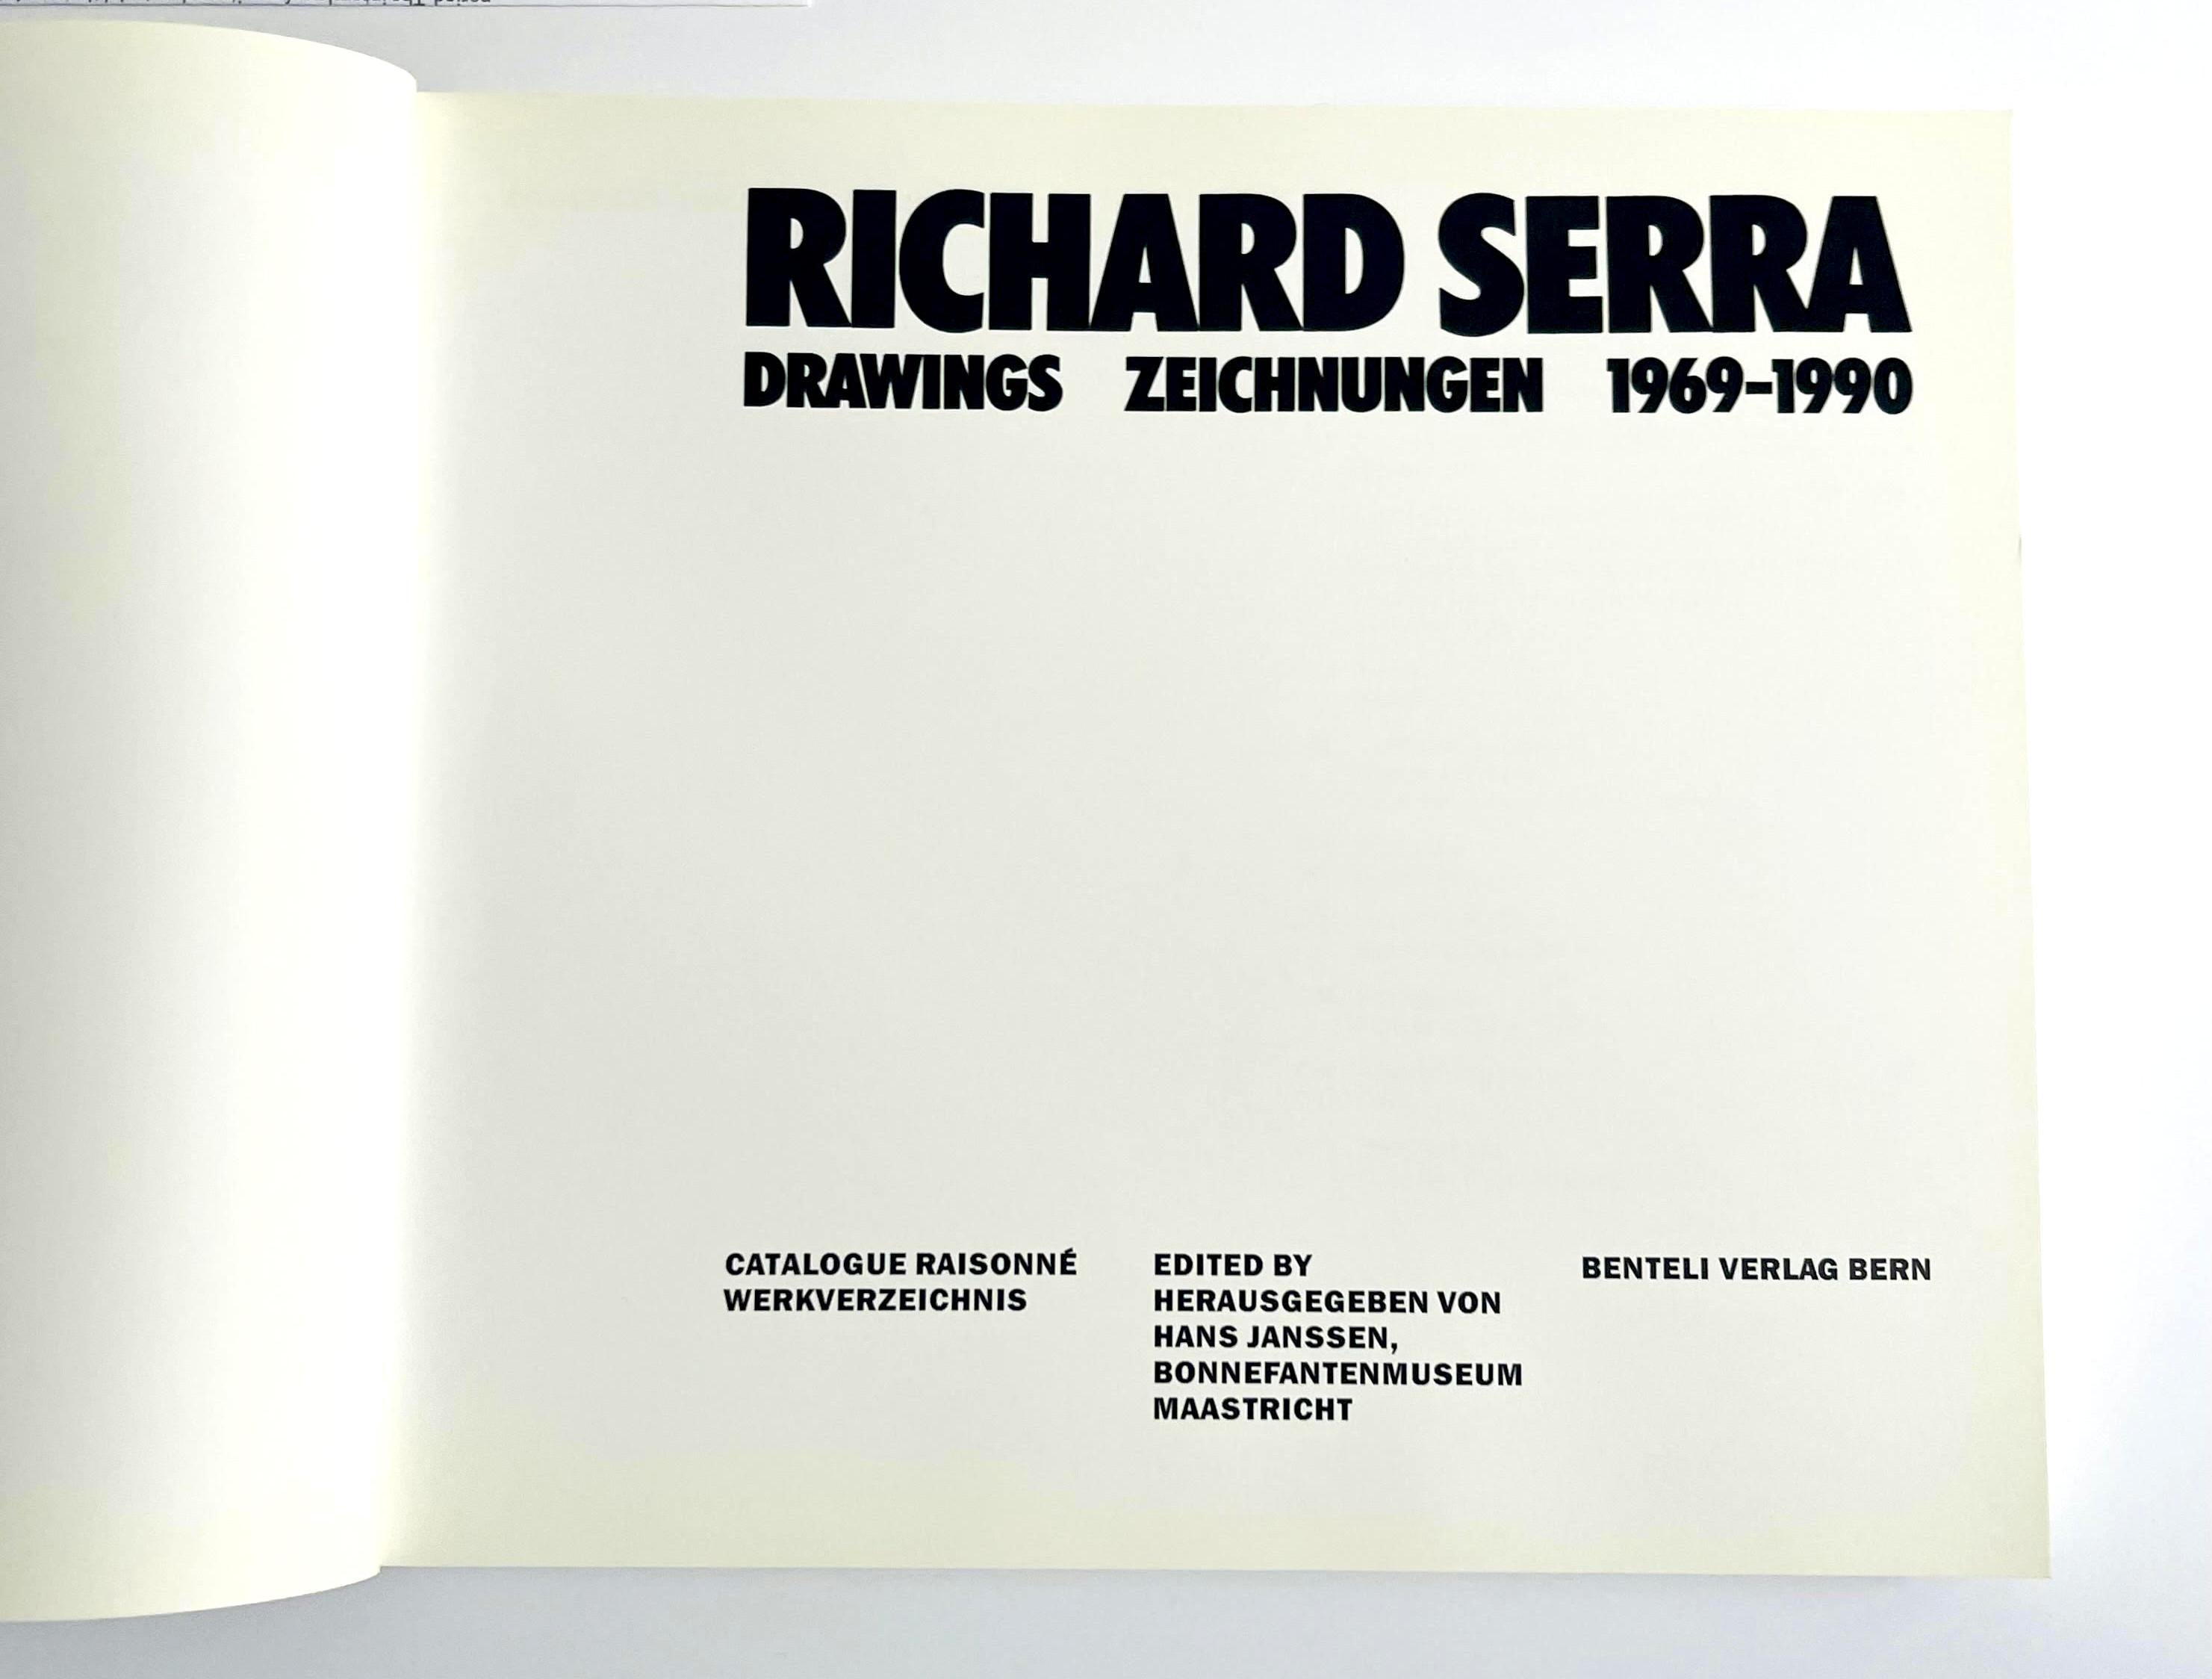 Richard Serra Drawings Zeichnungen 1969-1990 Book (Hand signed by Richard Serra) For Sale 3